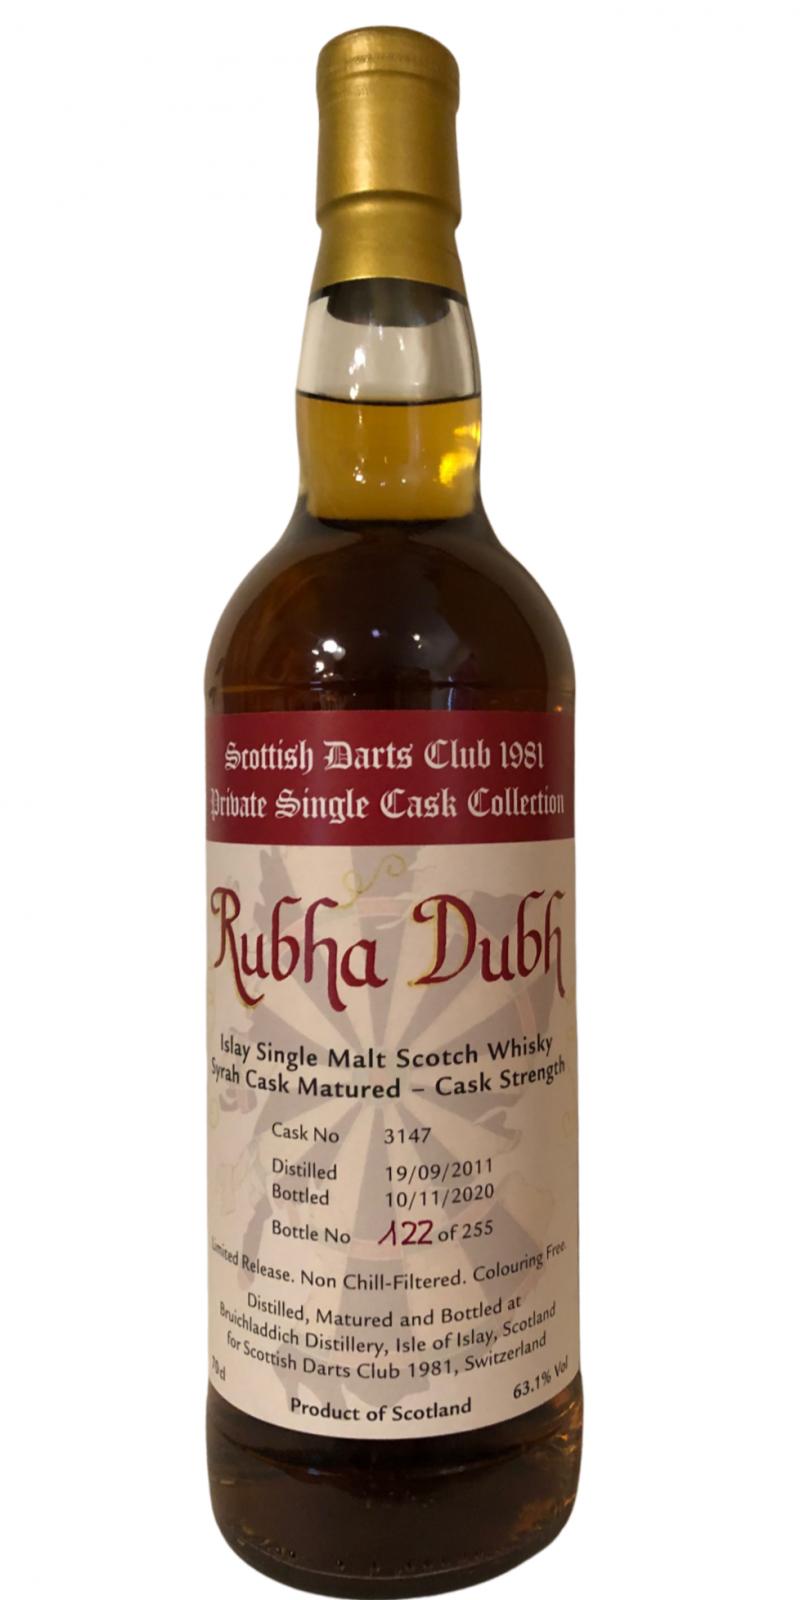 Bruichladdich 2011 Rubha Dubh Private Single Cask Bottling Syrah Hogshead #3147 Scottish Darts Club 1981 Switzerland 63.1% 700ml